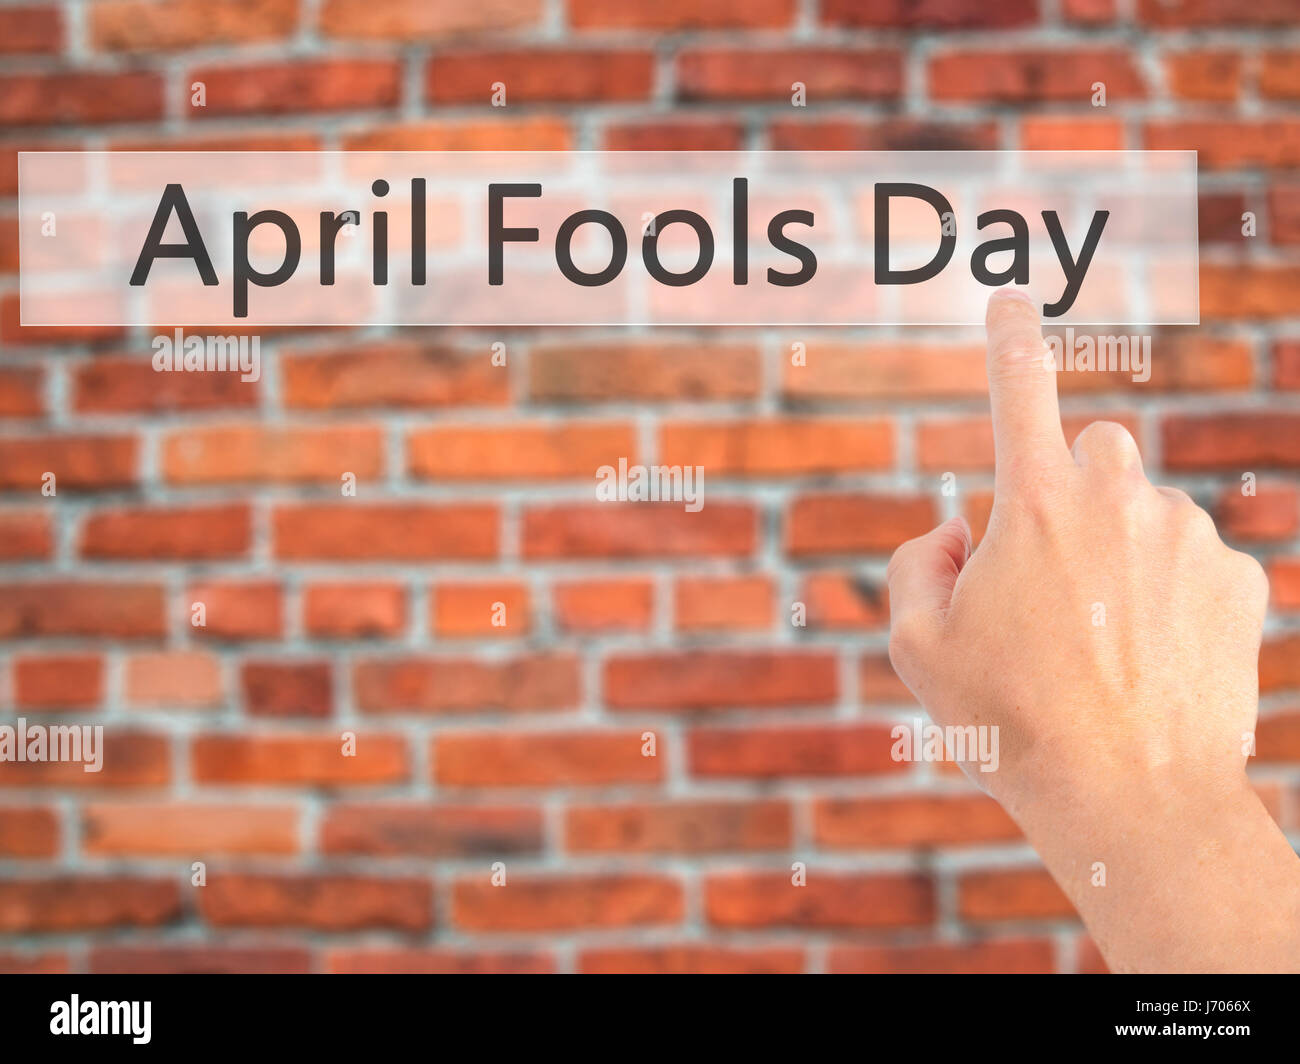 April Fools Day - Mano presionando un botón de fondo borroso concepto . Negocios, tecnología, internet concepto. Stock Photo Foto de stock